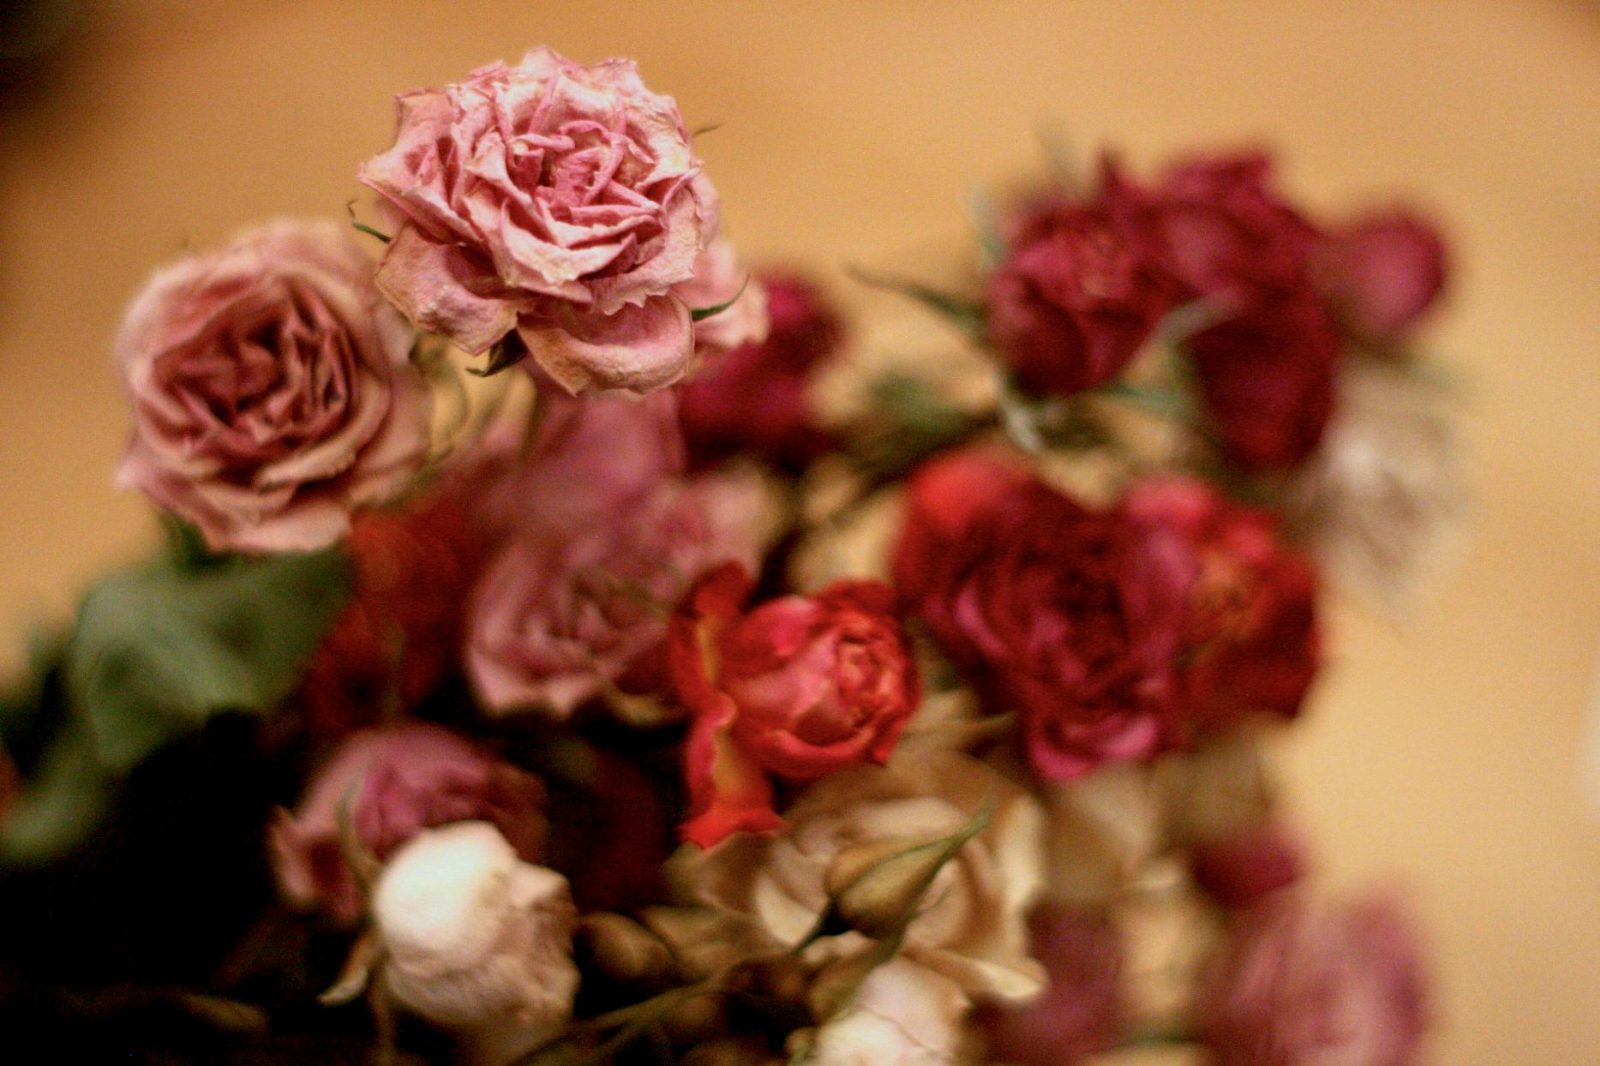 Kukyflor | Tendencia en regalos: Flores disecadas